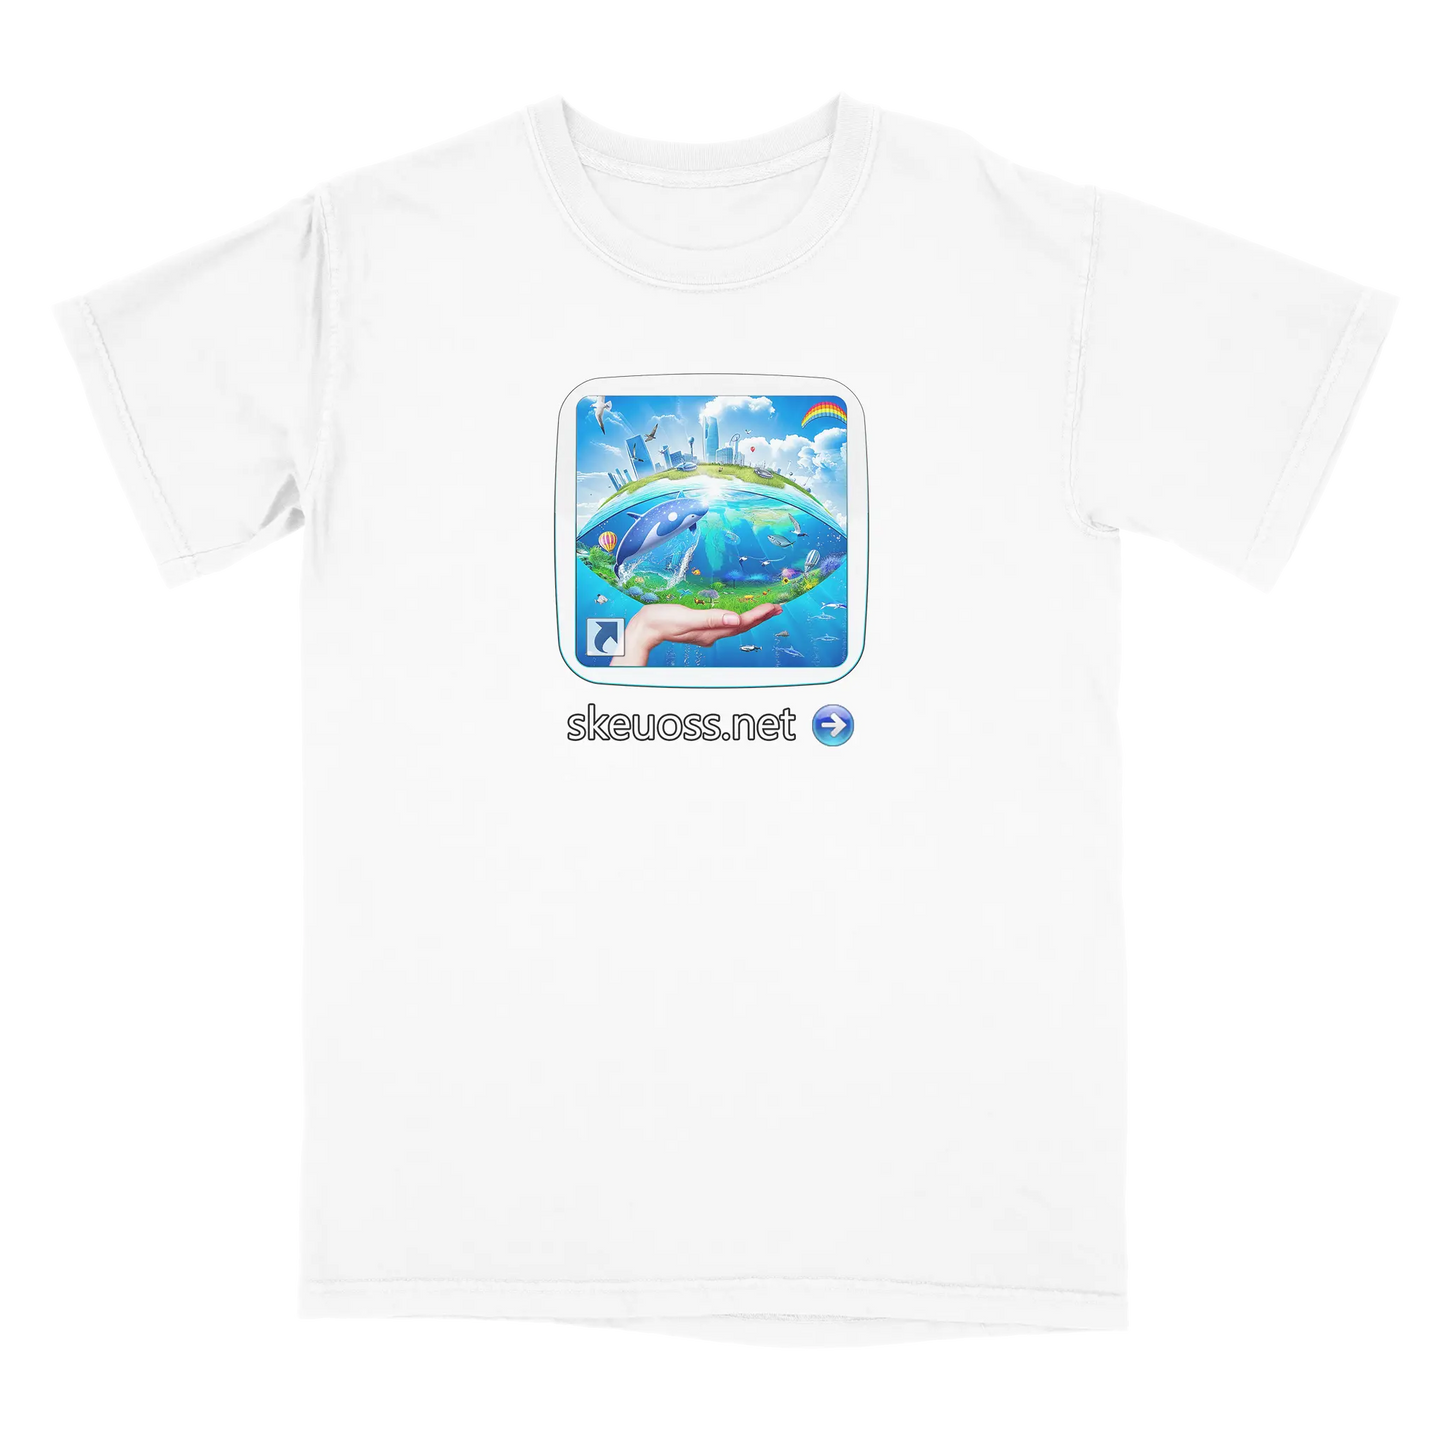 Frutiger Aero T-shirt - User Login Collection - User 156